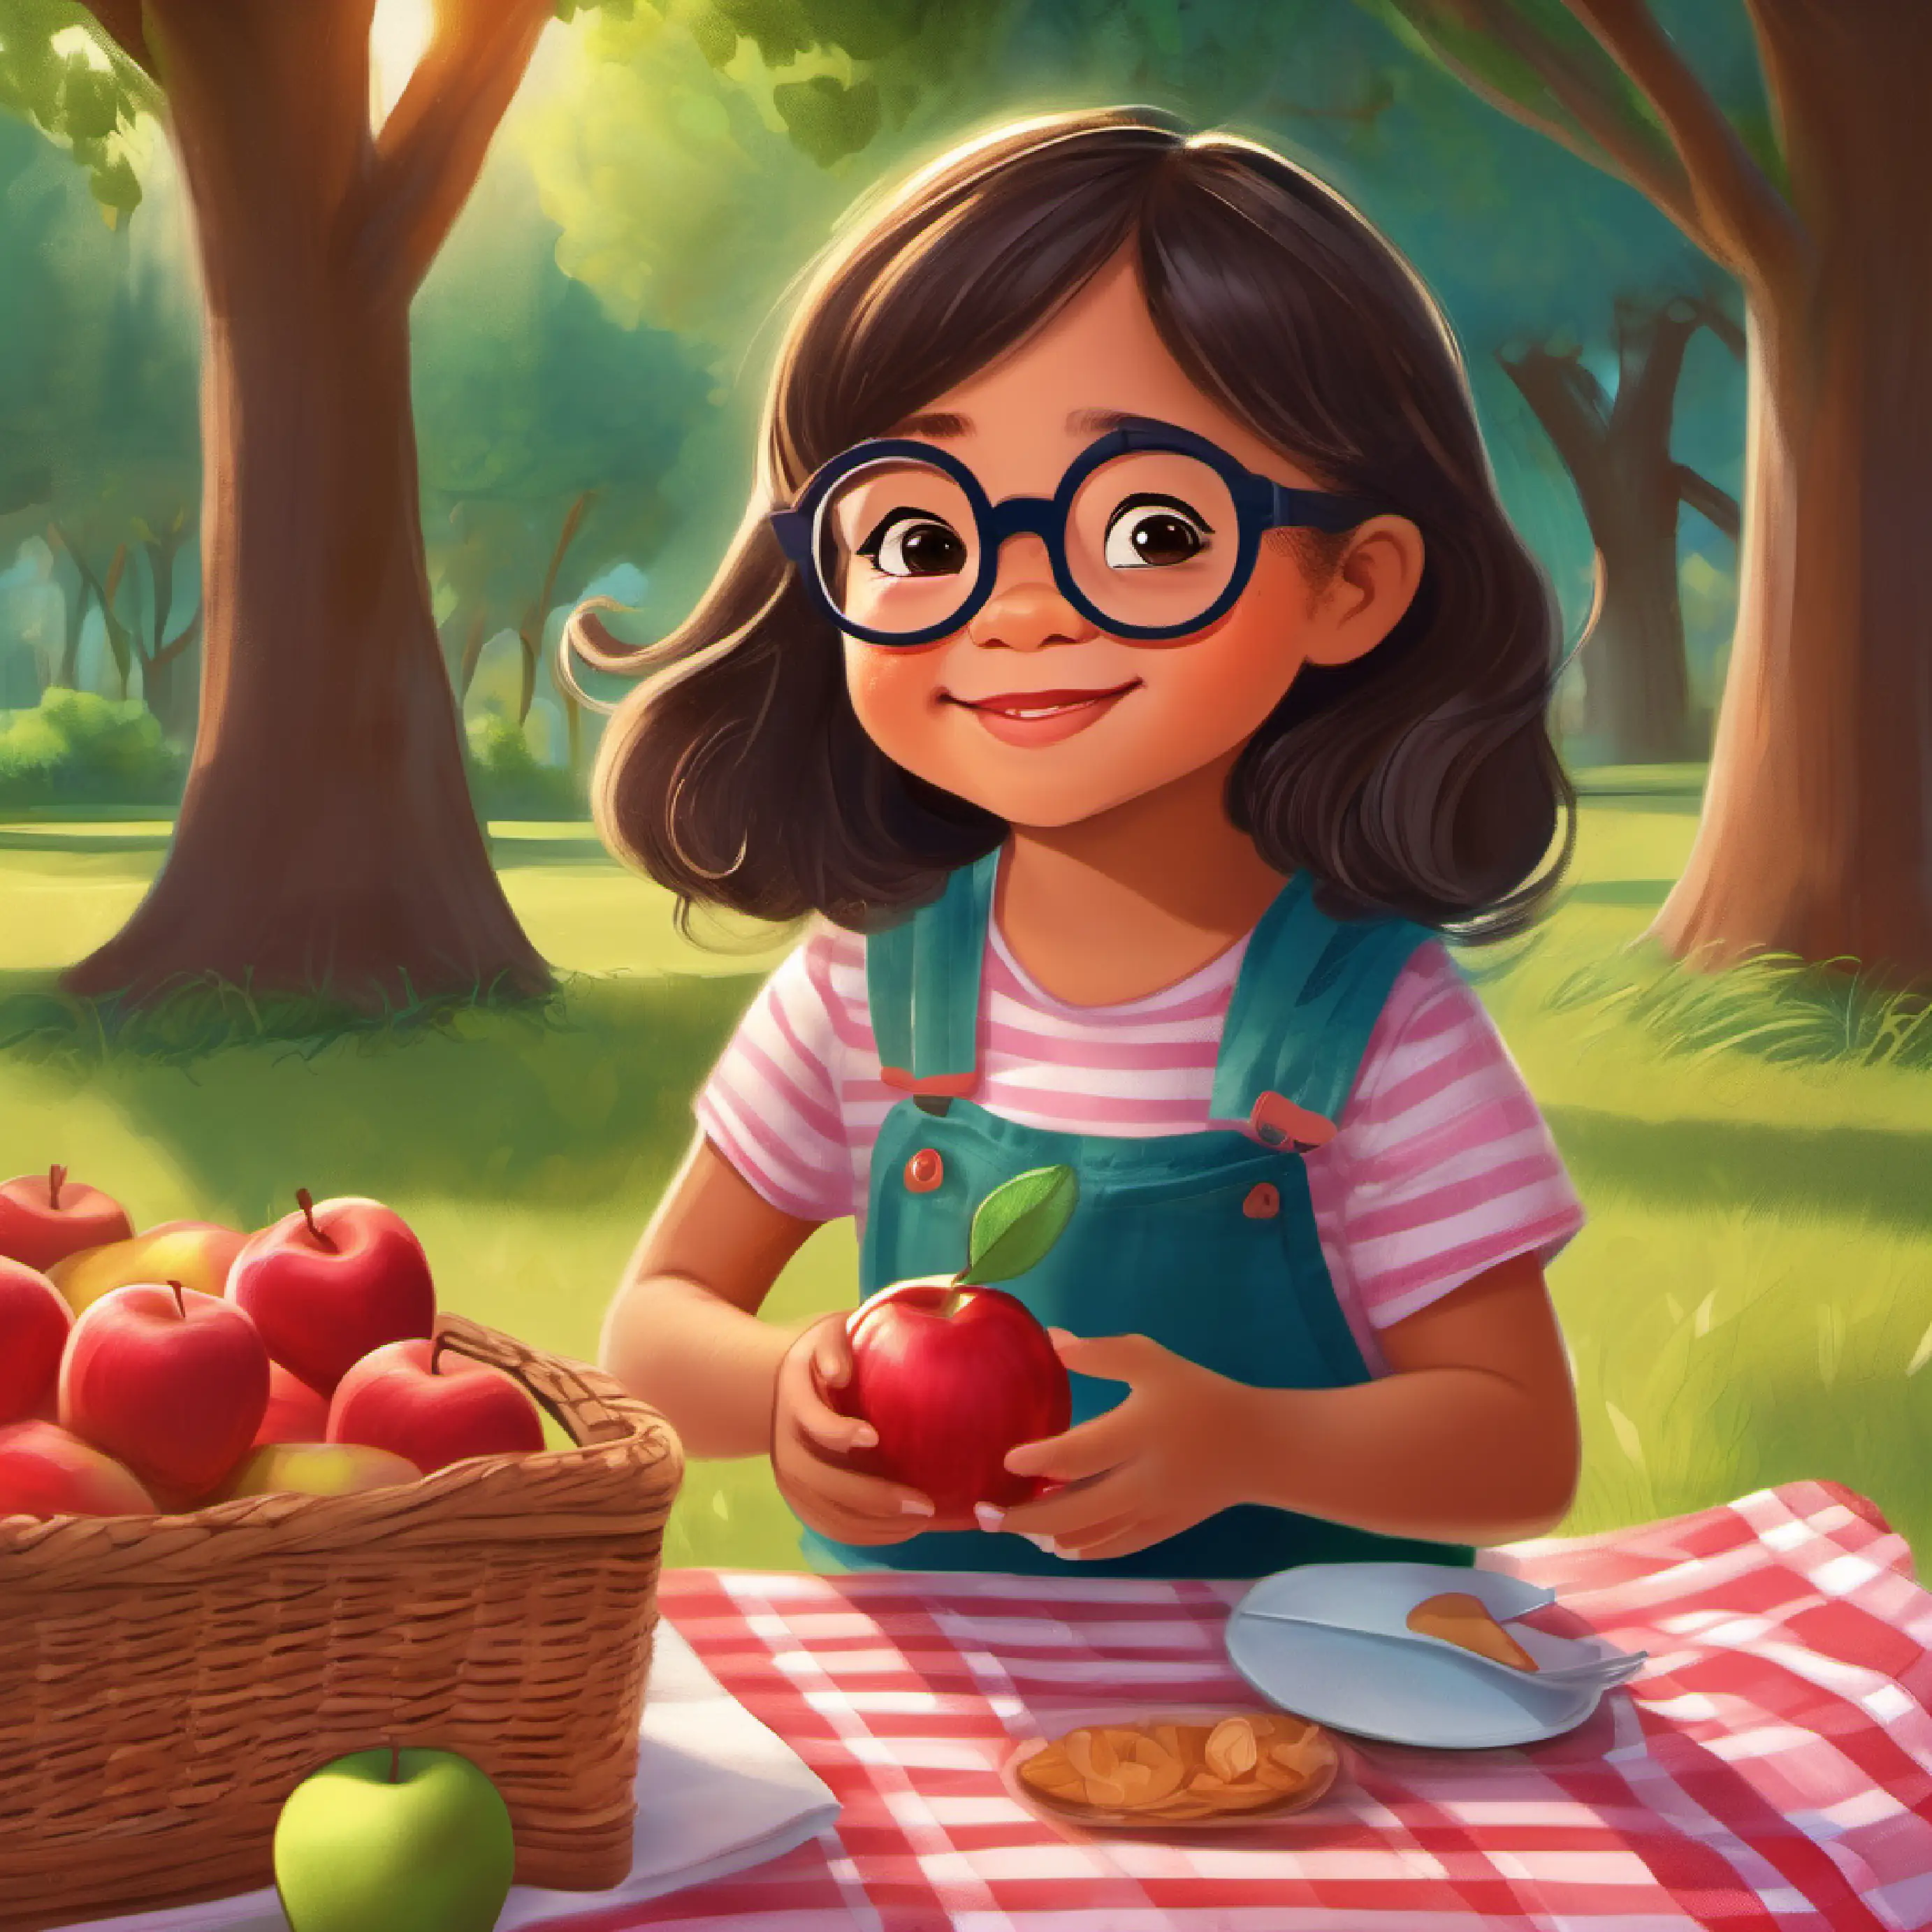 Karen is having a picnic, eating an apple.